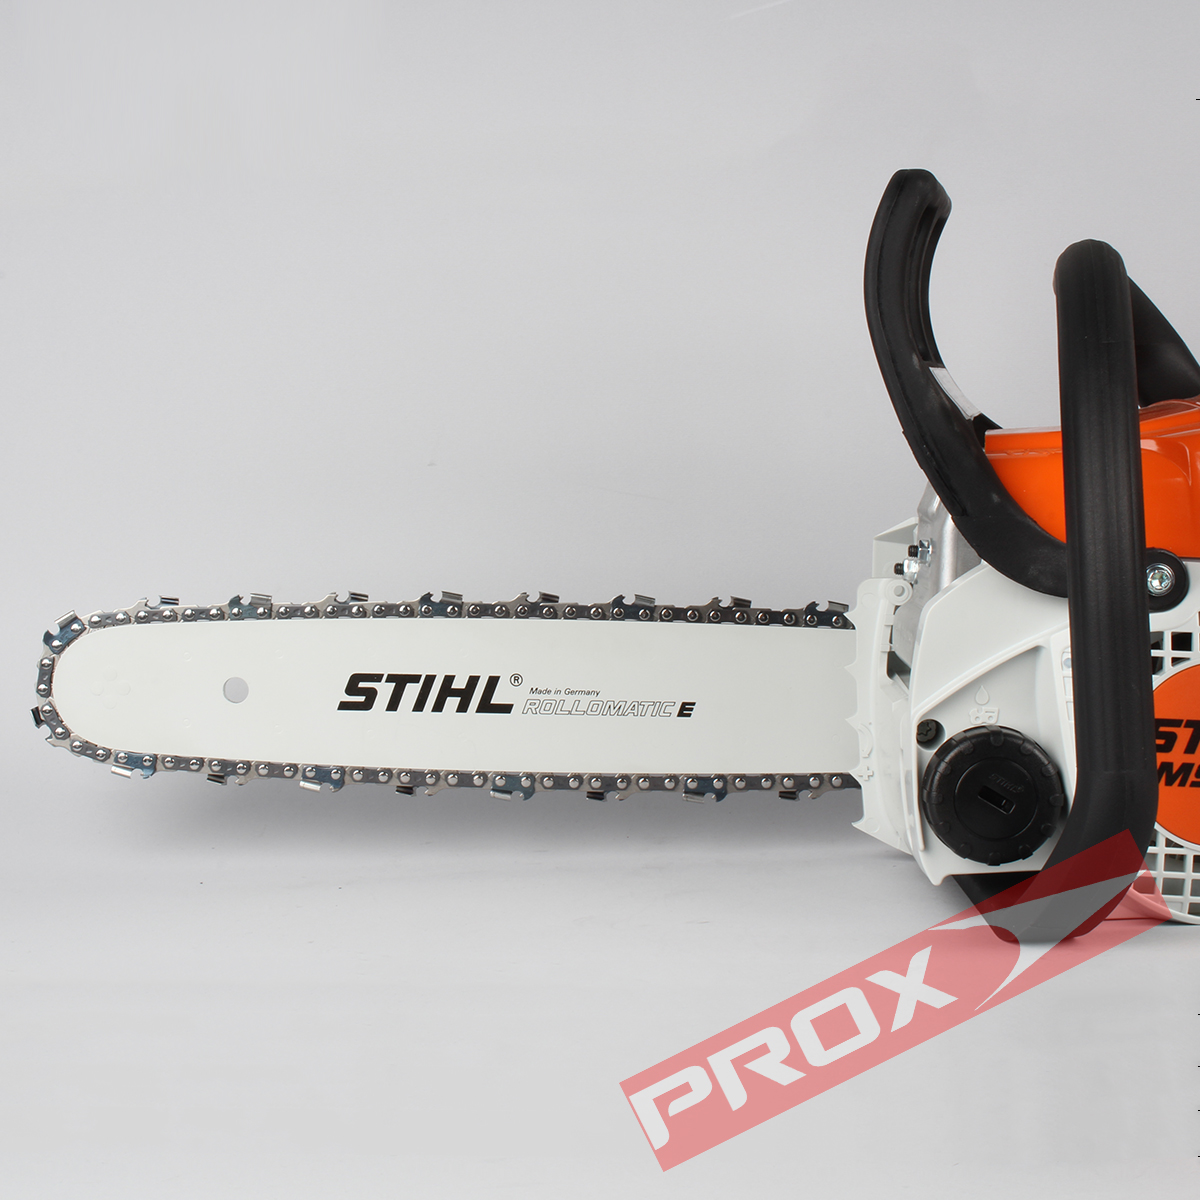 Benzinska motorna pila - motorka STIHL MS 180 2KS 35cm < PROX doo - Kvalitetan  alat po super cijeni